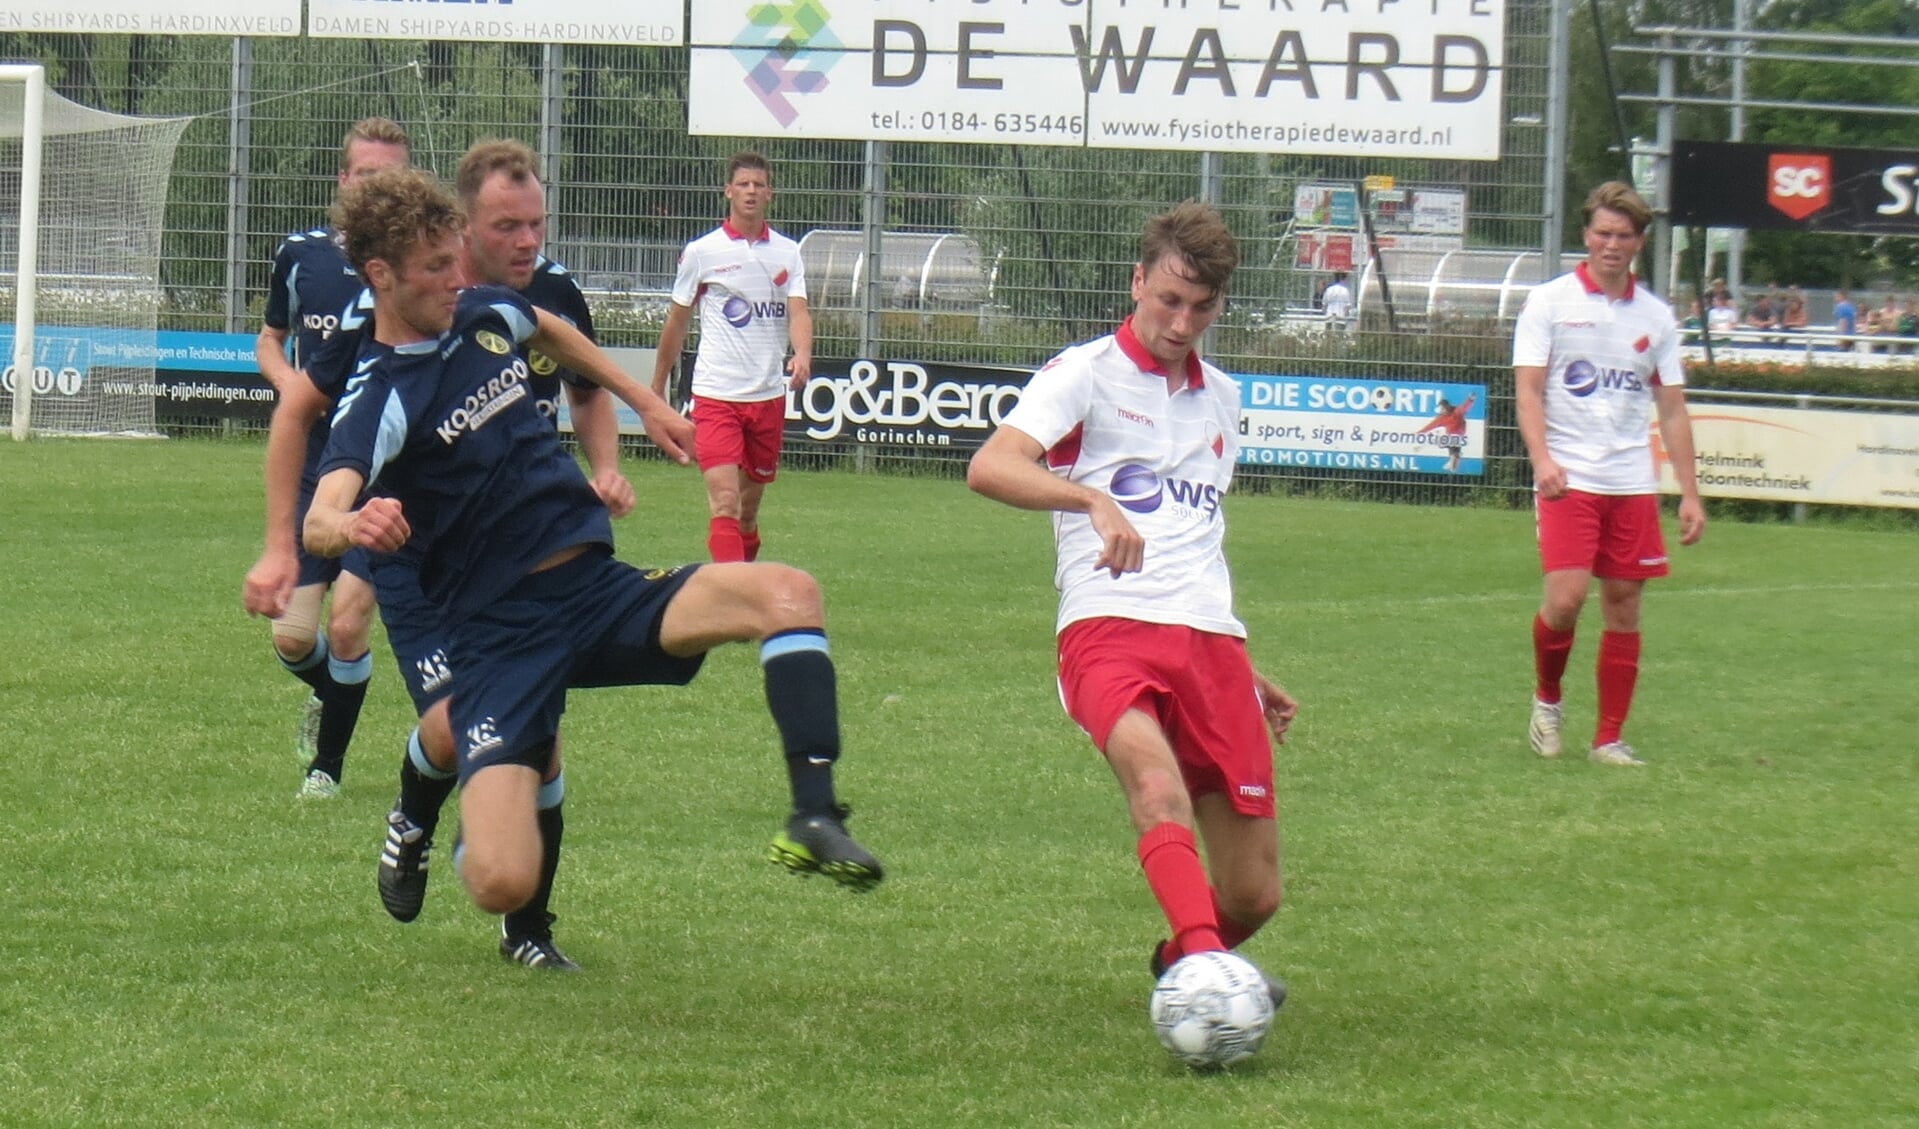 Hardinxveld - FC Perkouw (2-1).